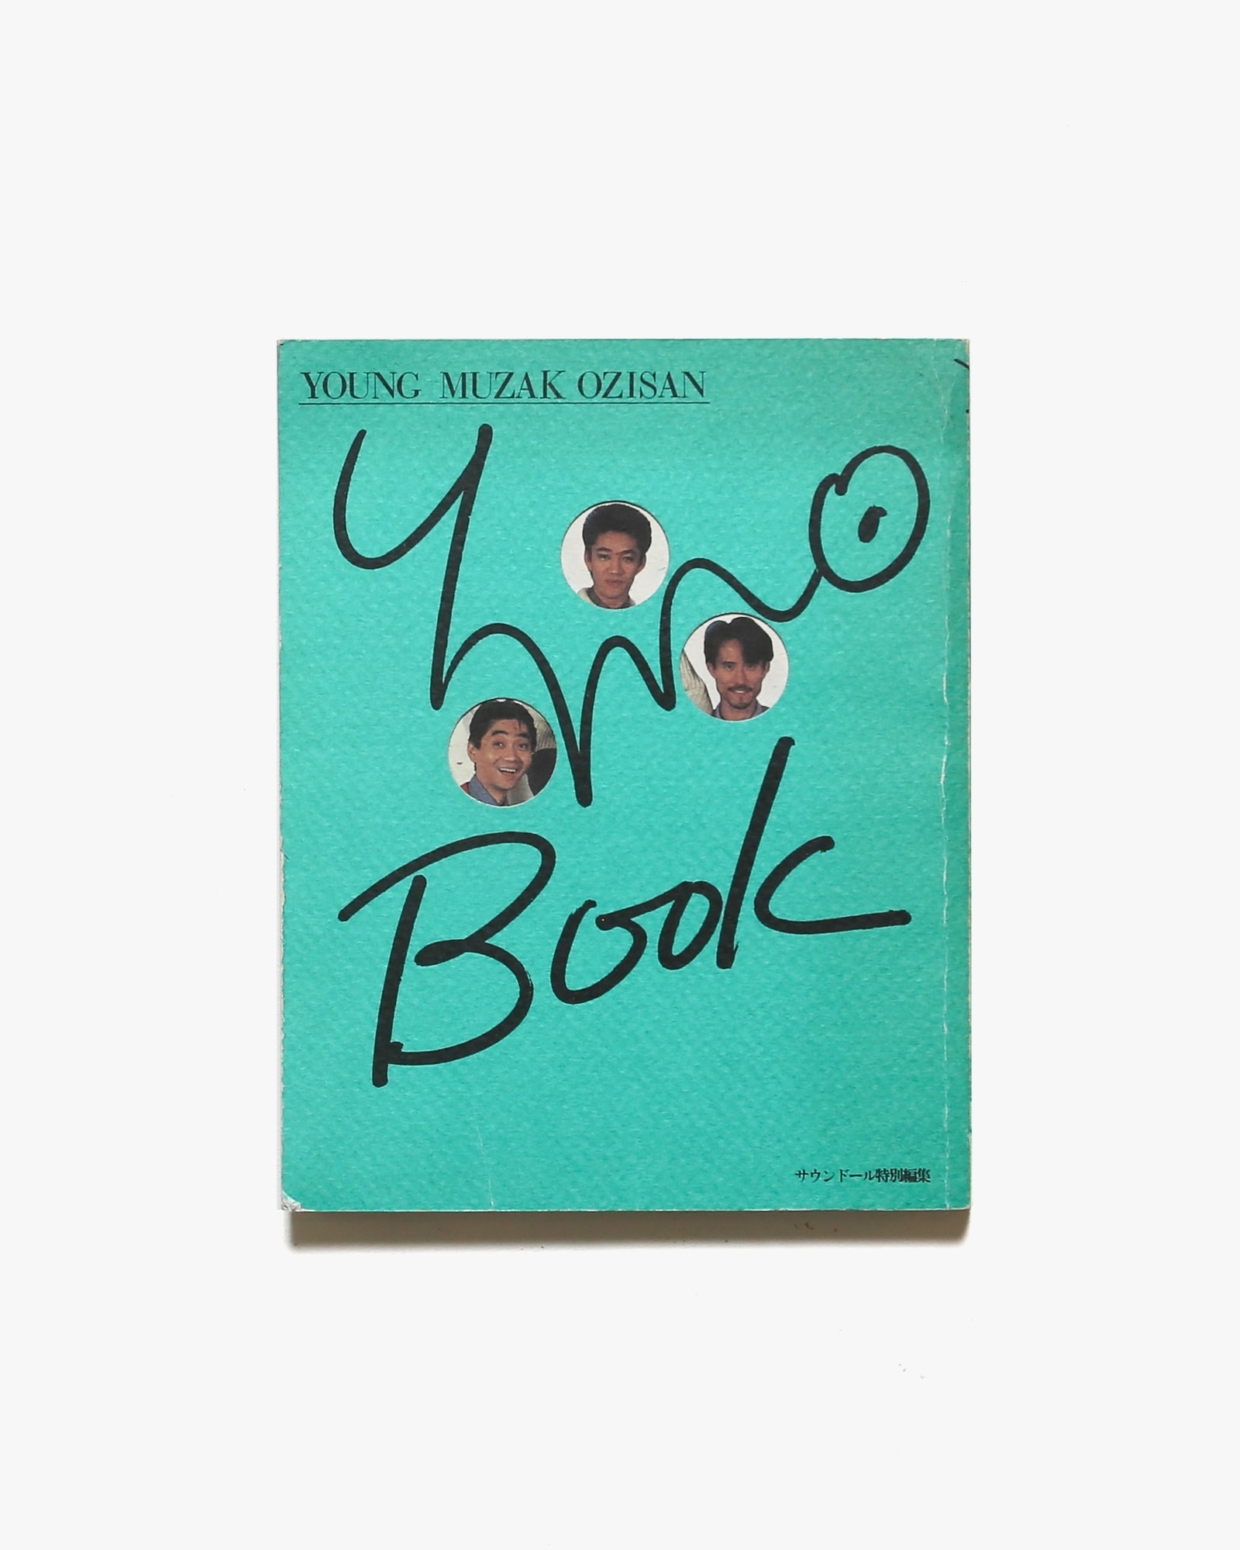 YMO Book: Young Muzak Ozisan